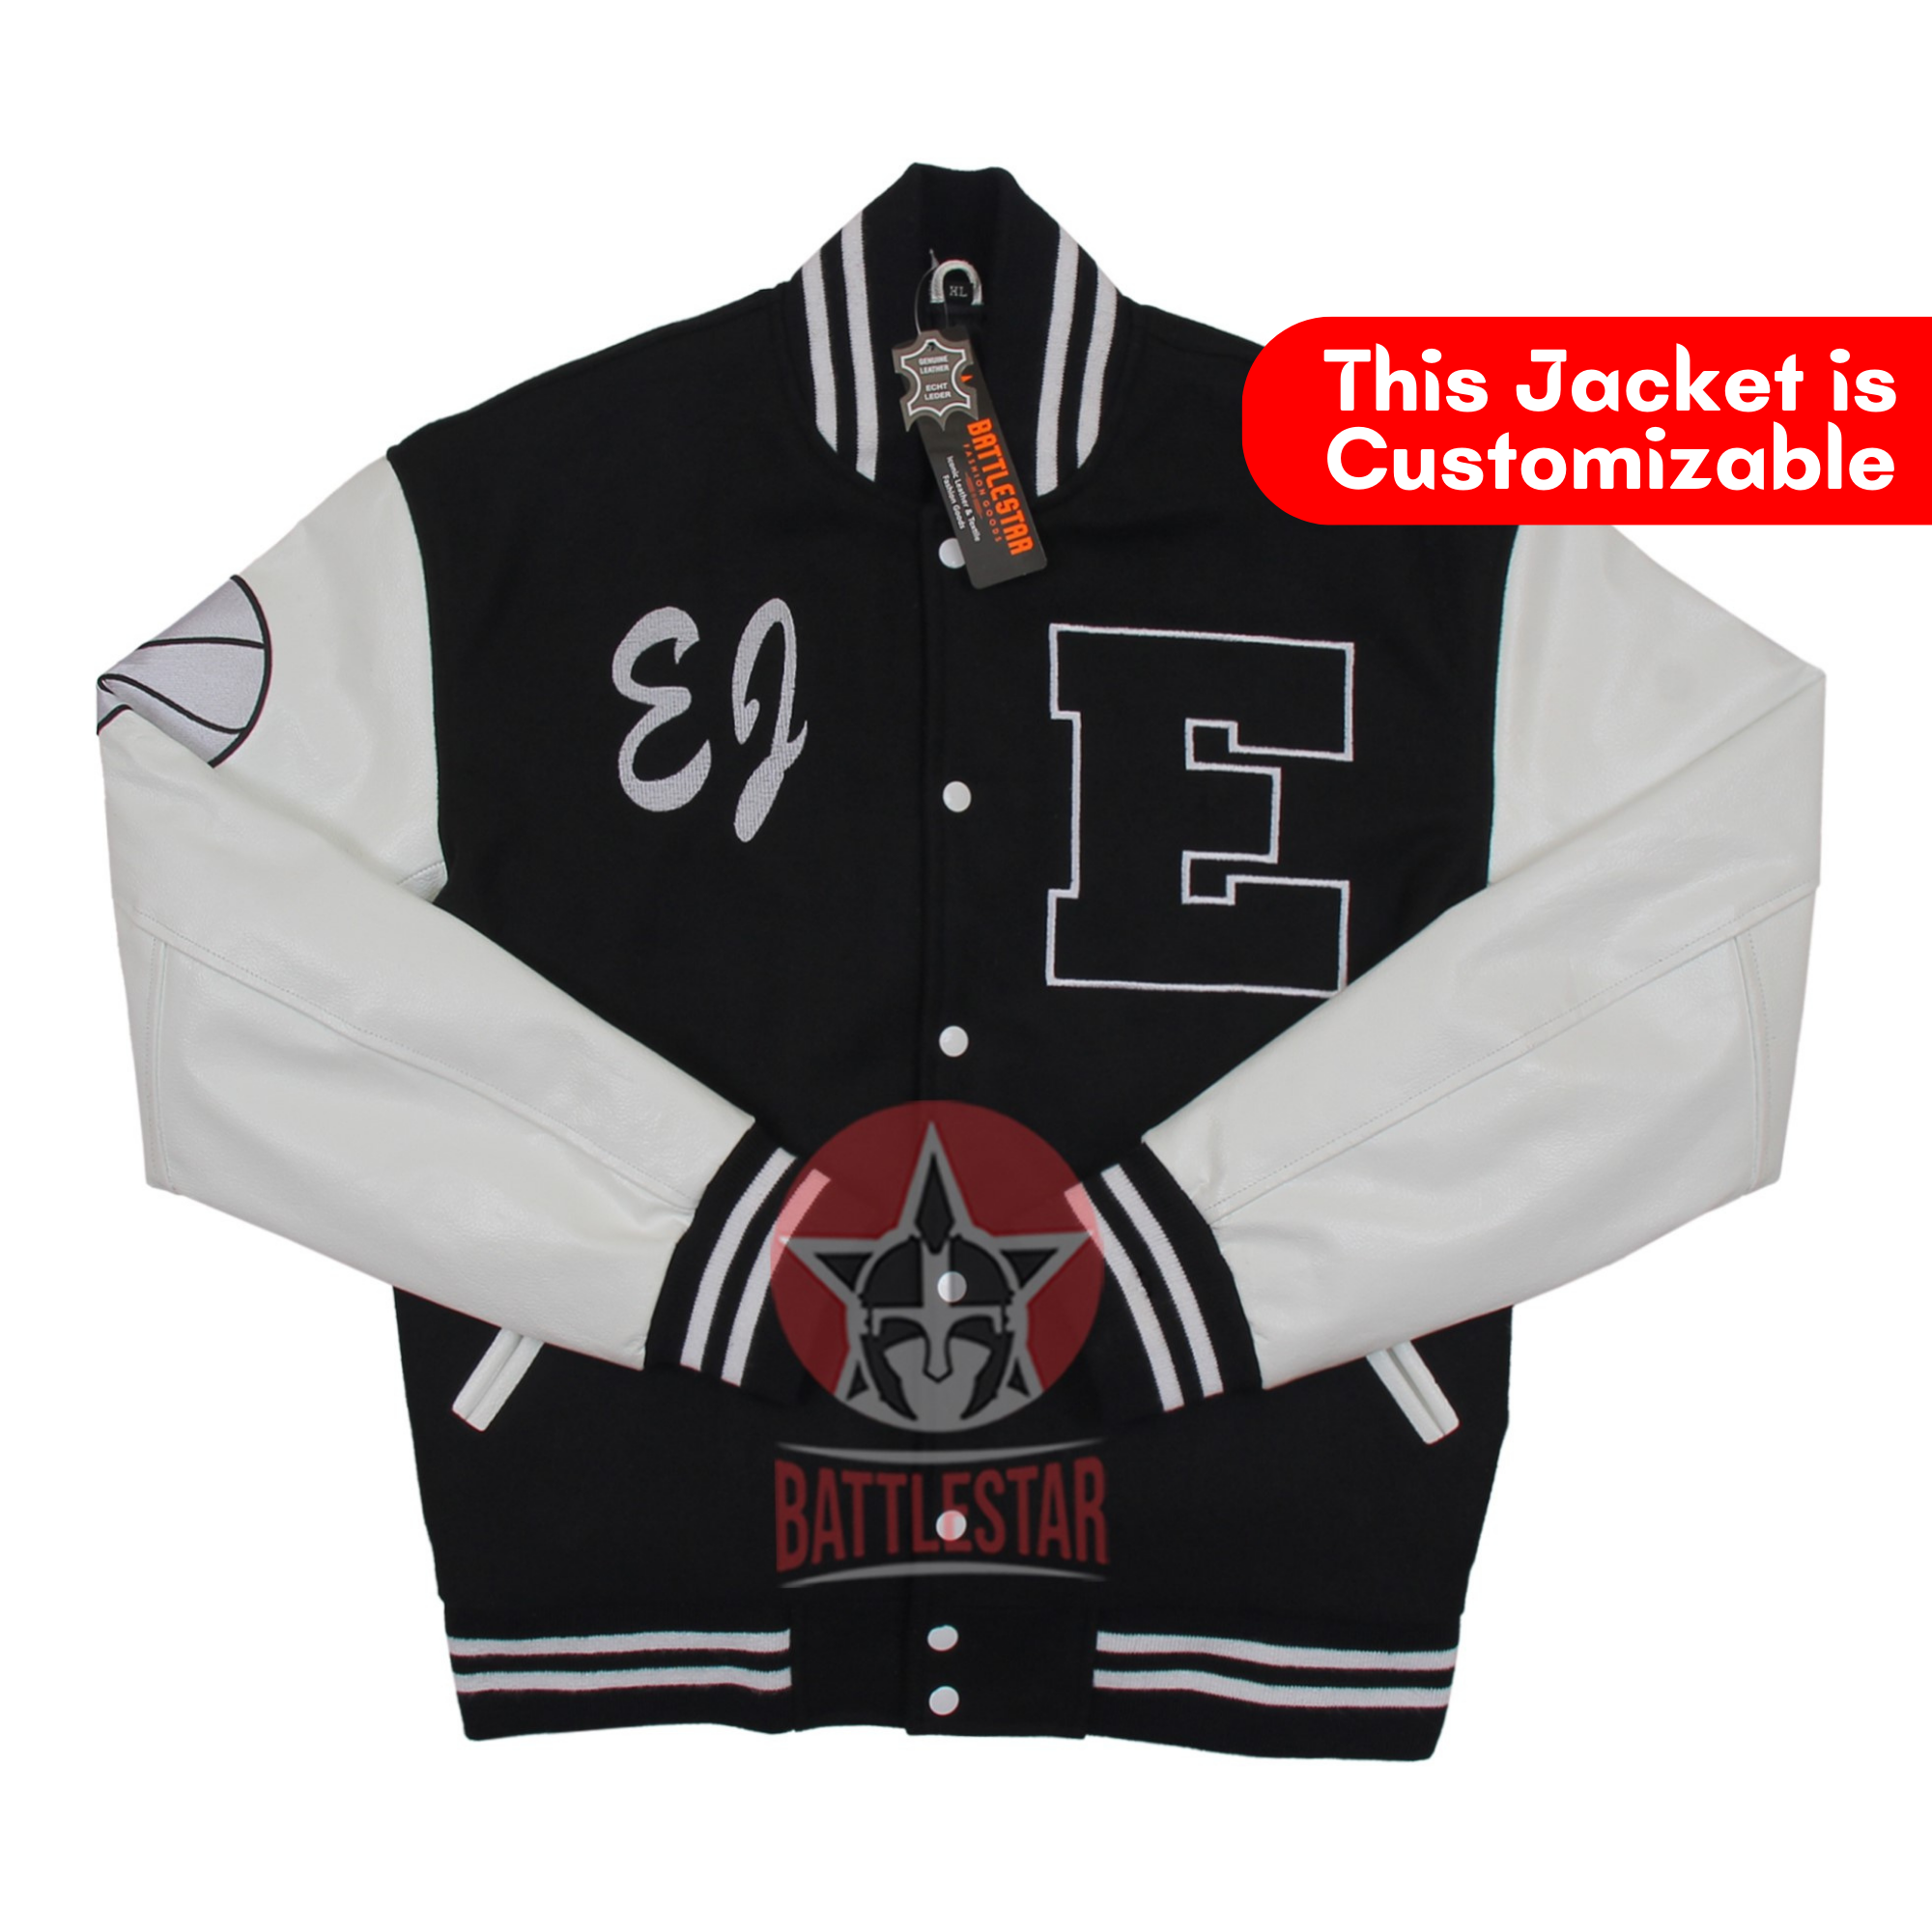 Musical EJ Black Wool White Leather Sleeves Baseball Jacket